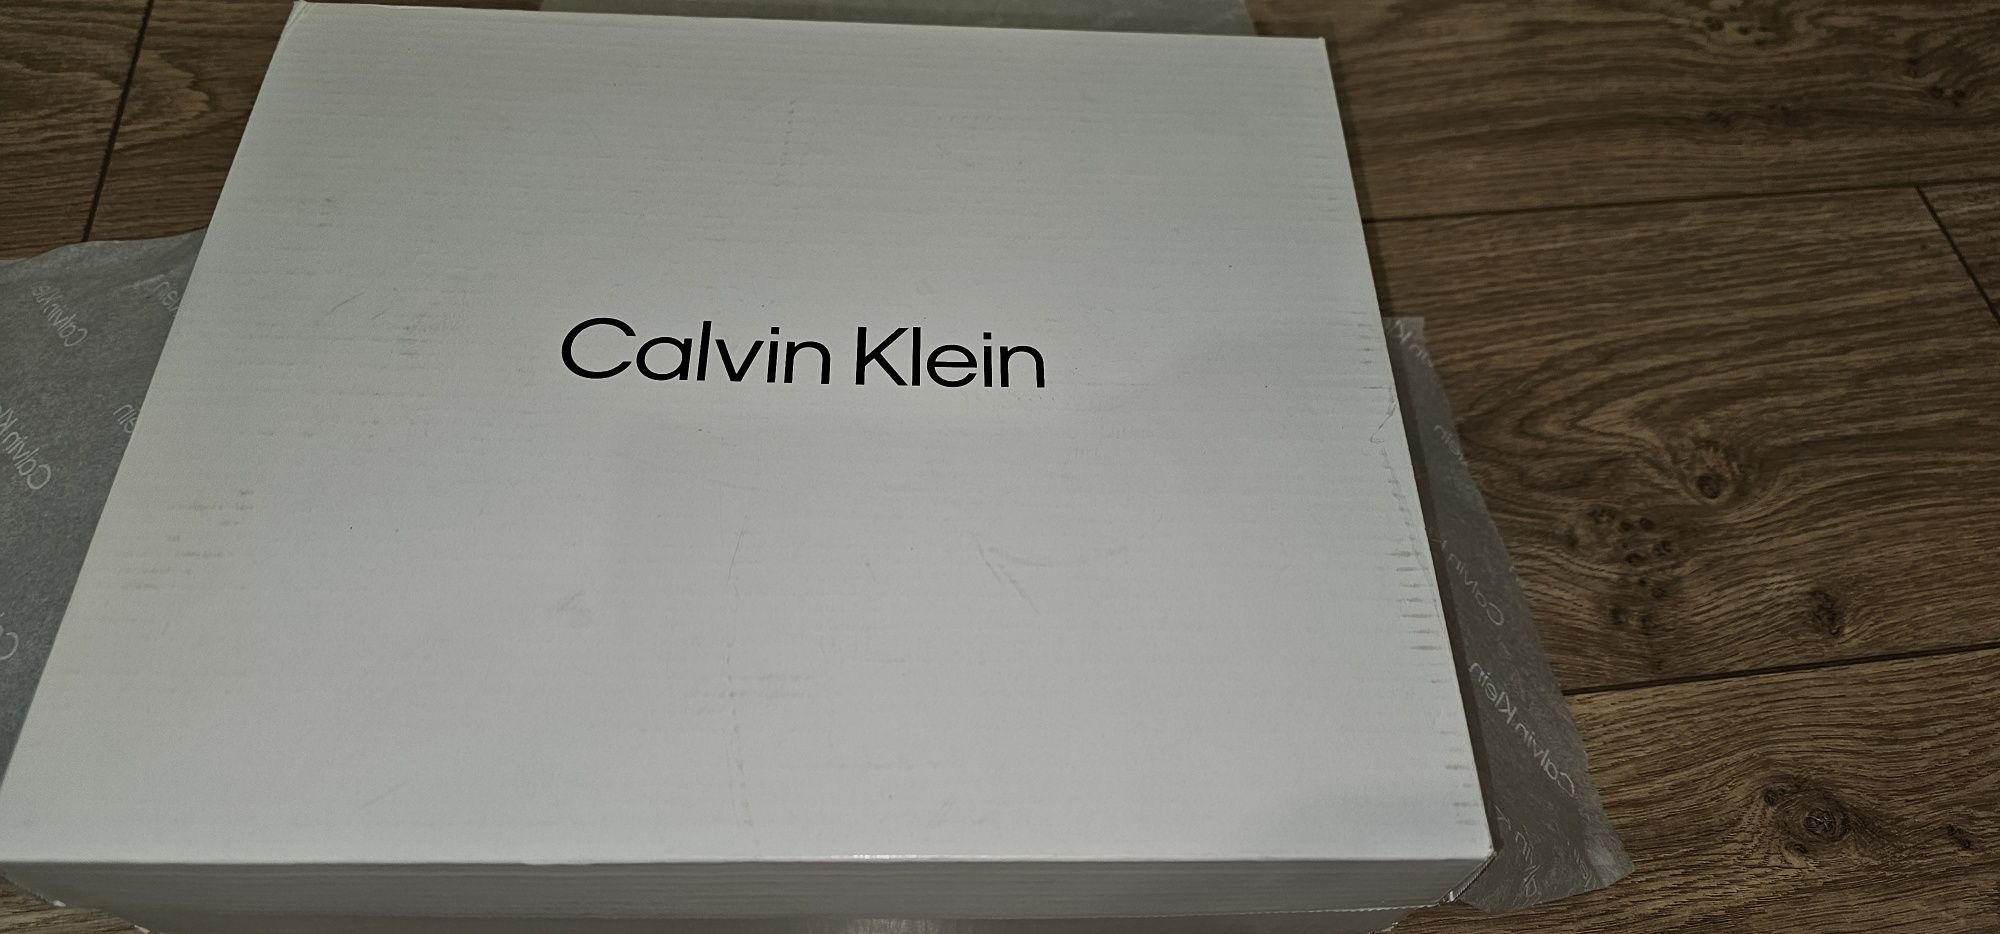 Полуботинки Calvin Klein ck